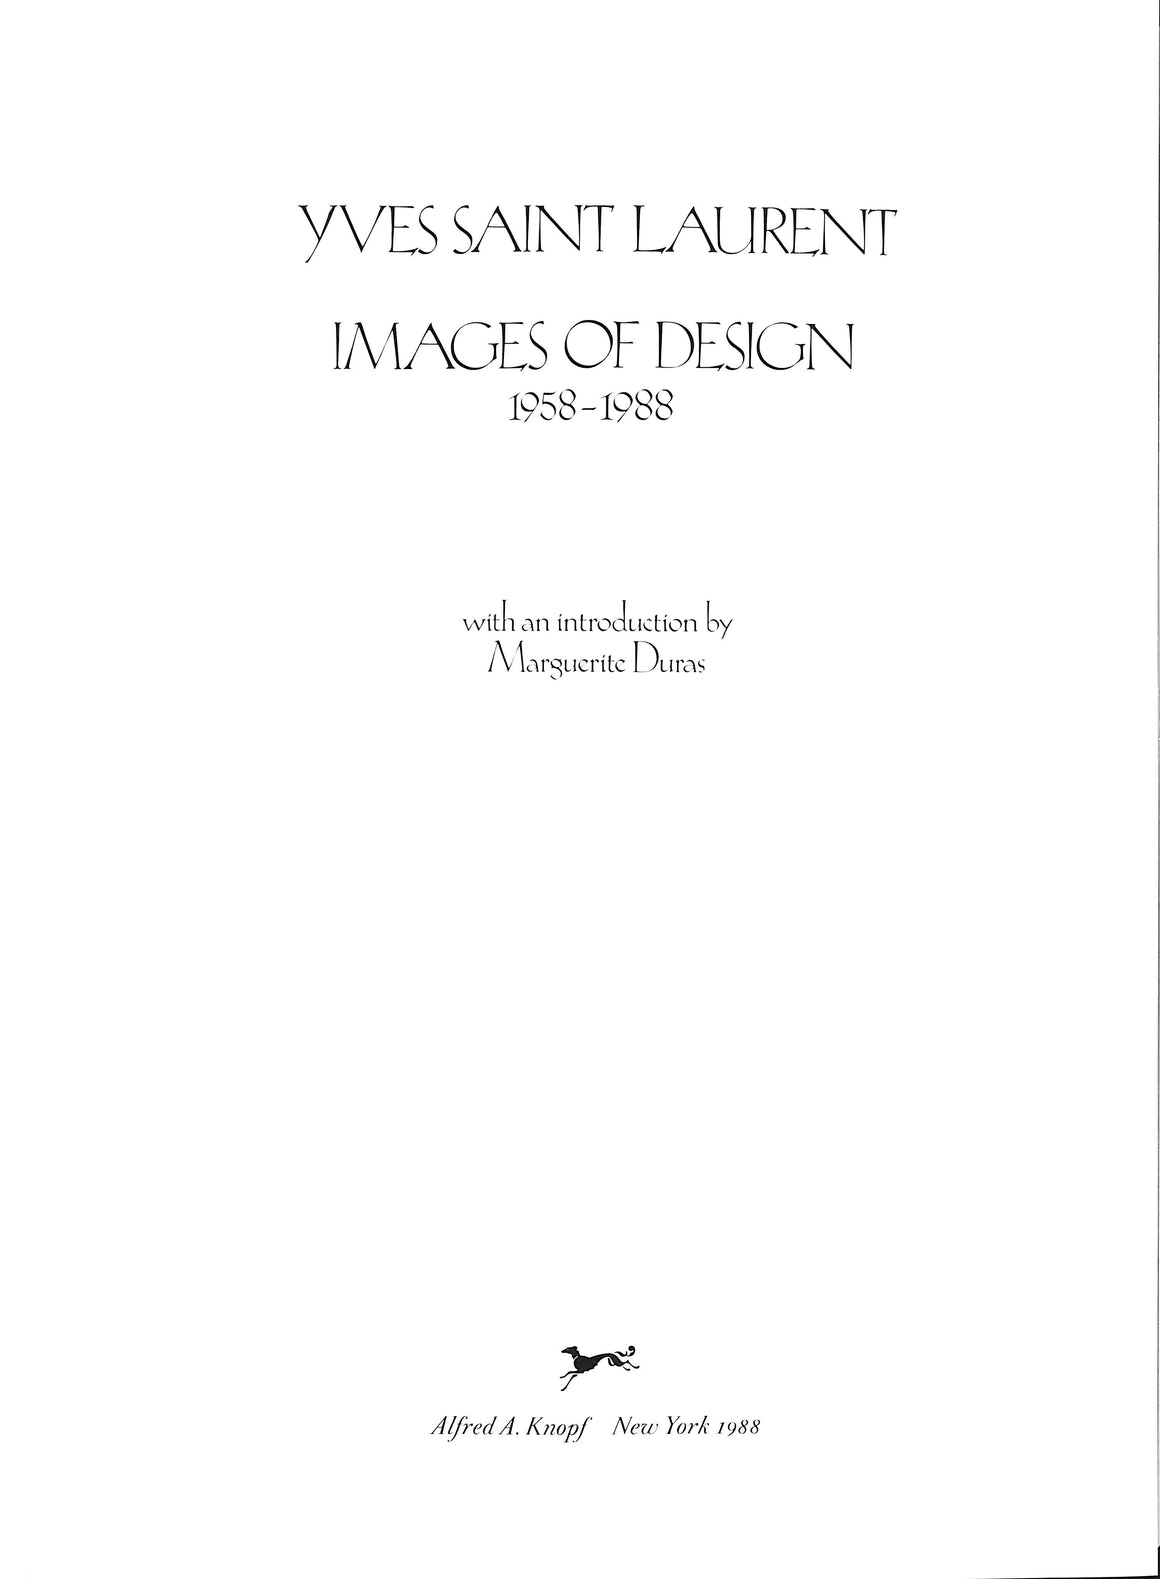 "Yves Saint Laurent: Images Of Design 1958-1988"